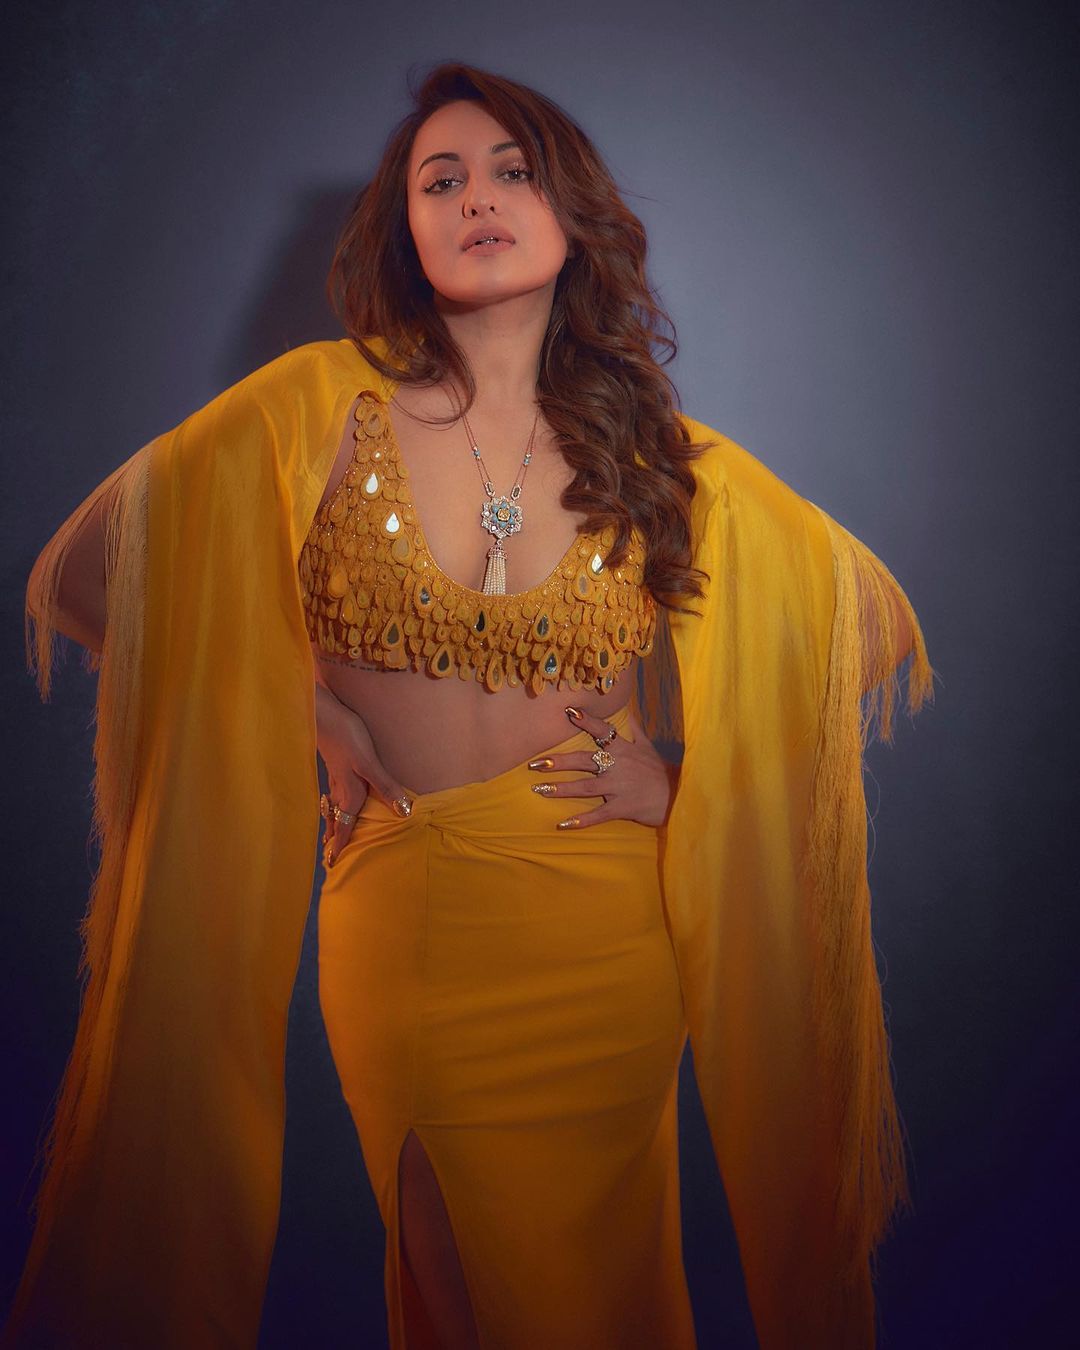 sonakshi-sinha-stunning-looks-in-amazing-yellow-dress